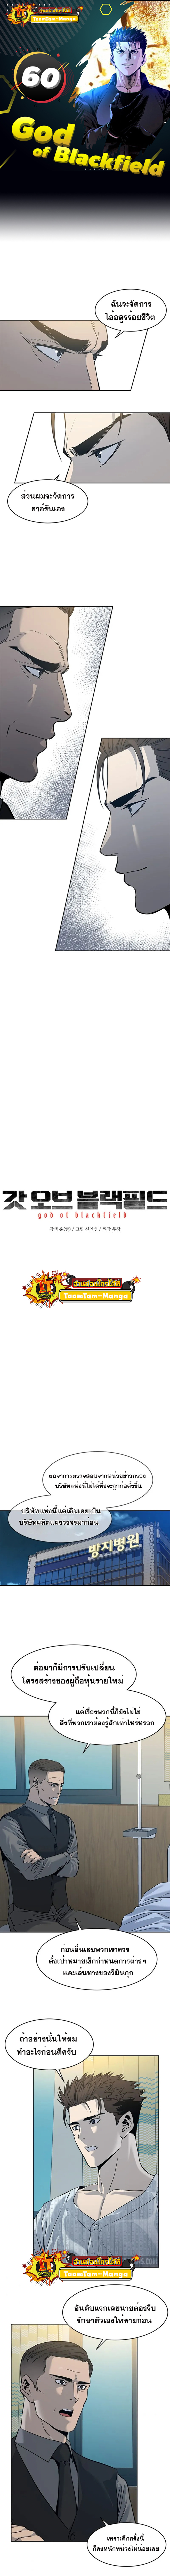 God of Blackfield 60 (1)